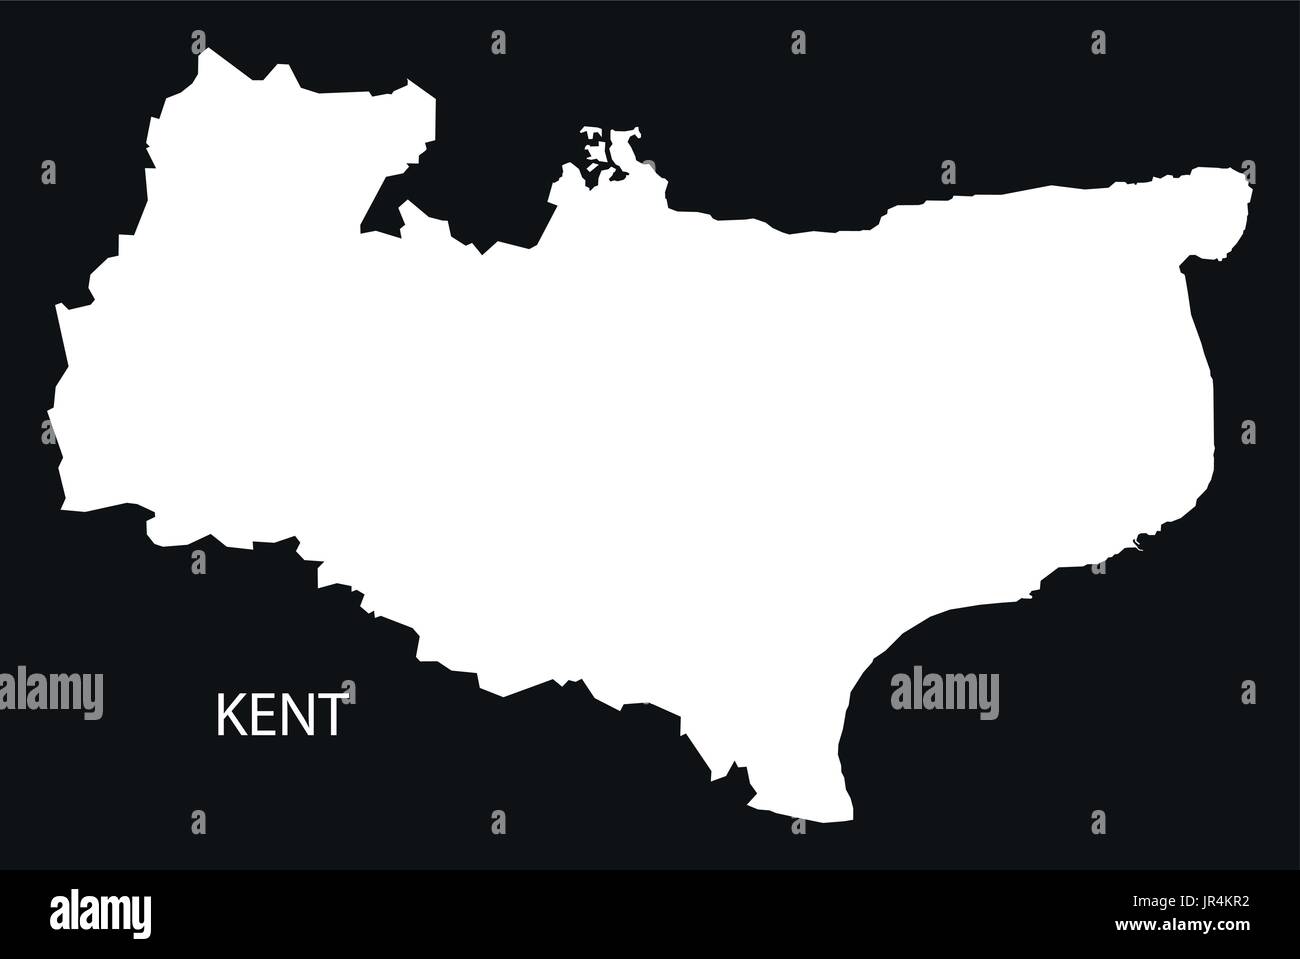 Kent England UK Karte schwarze Silhouette invertierte Darstellung Stock Vektor